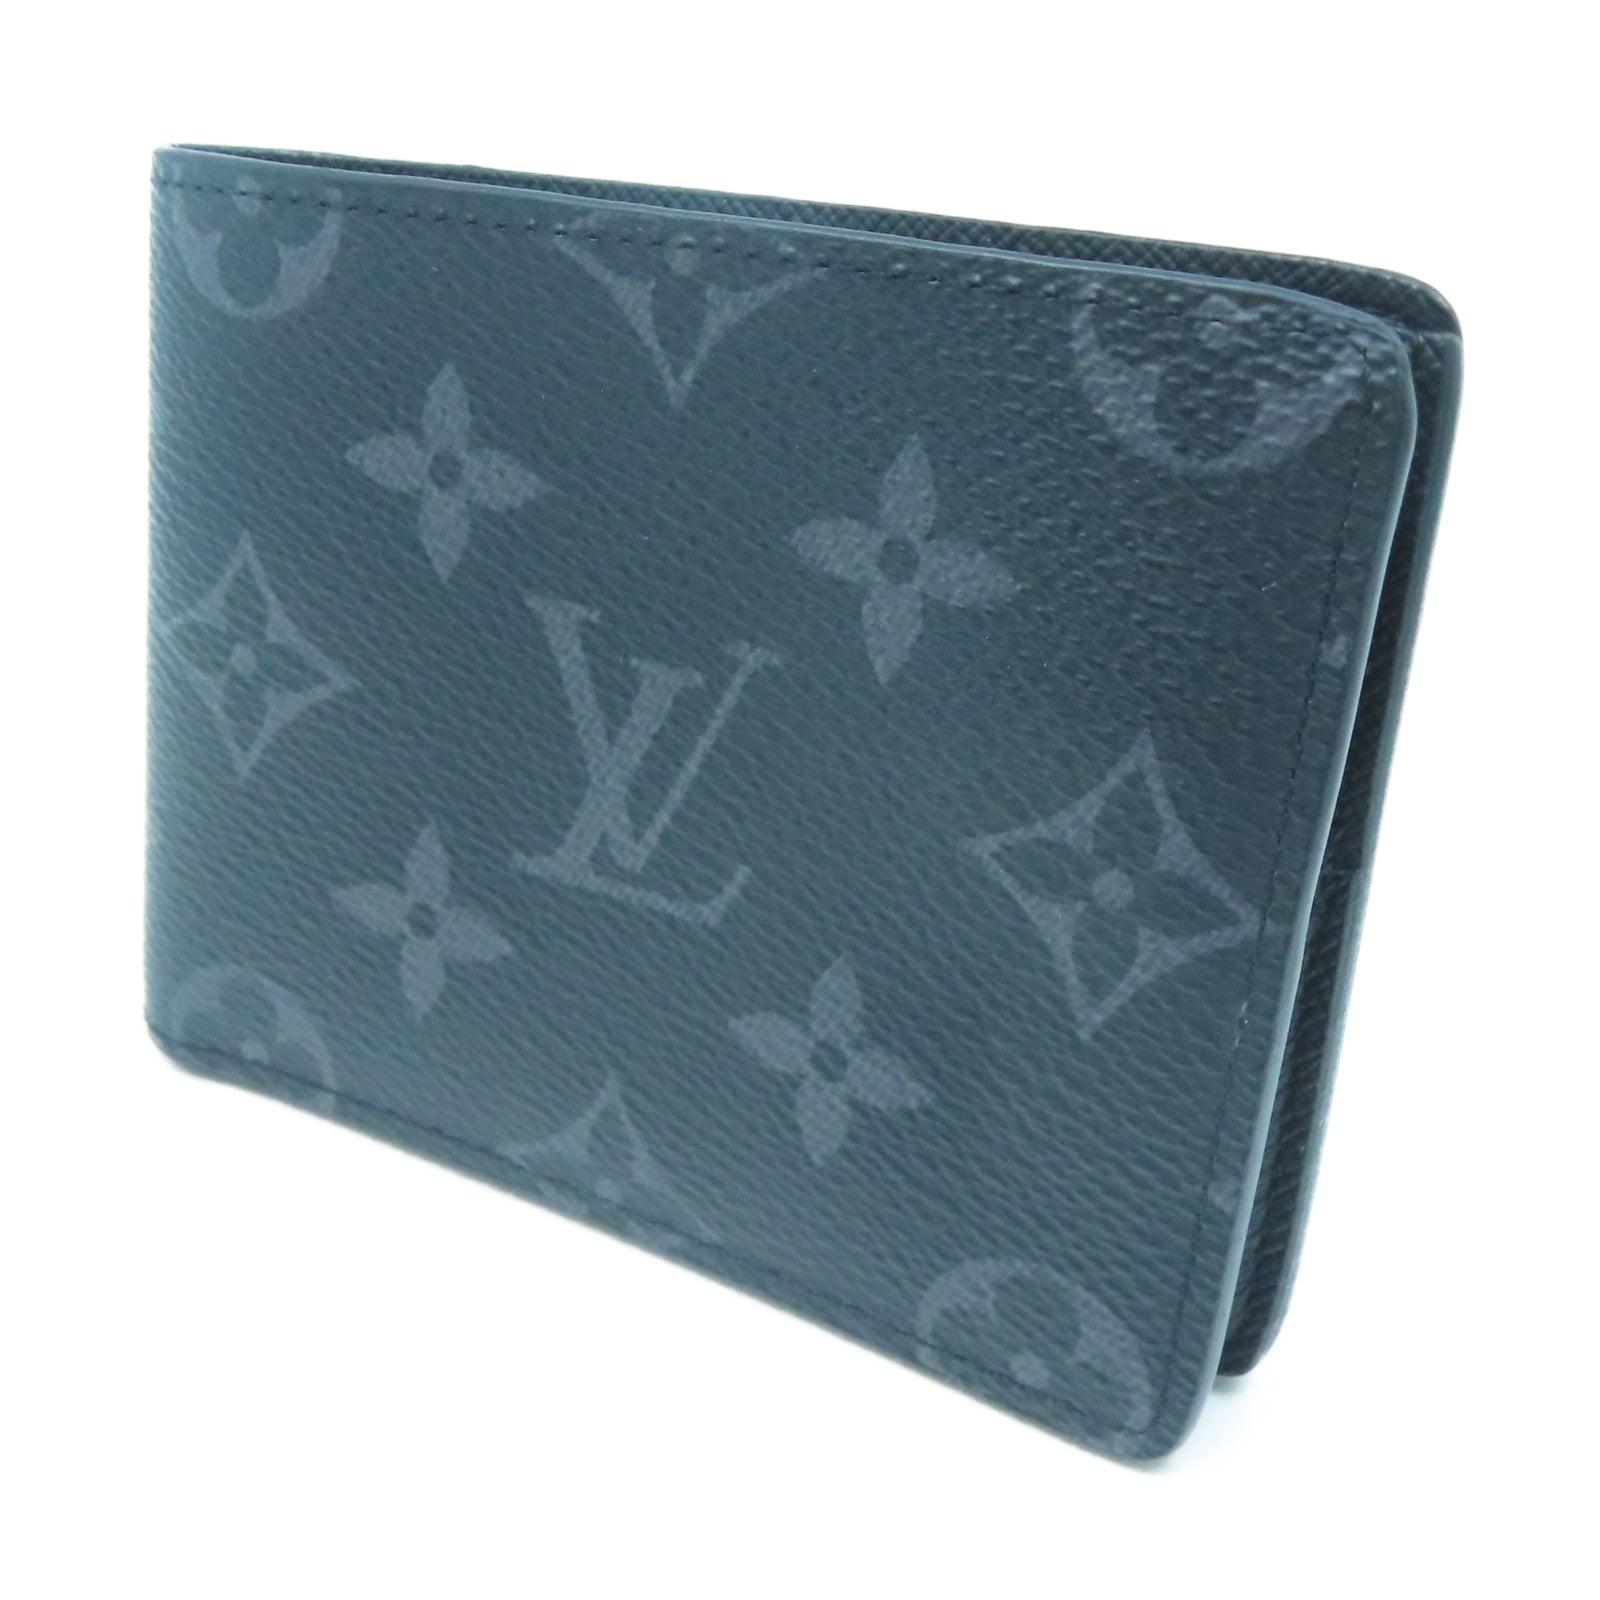 LOUIS VUITTON Monogram Eclipse Slender Wallet Black – Brand Off Hong Kong  Online Store